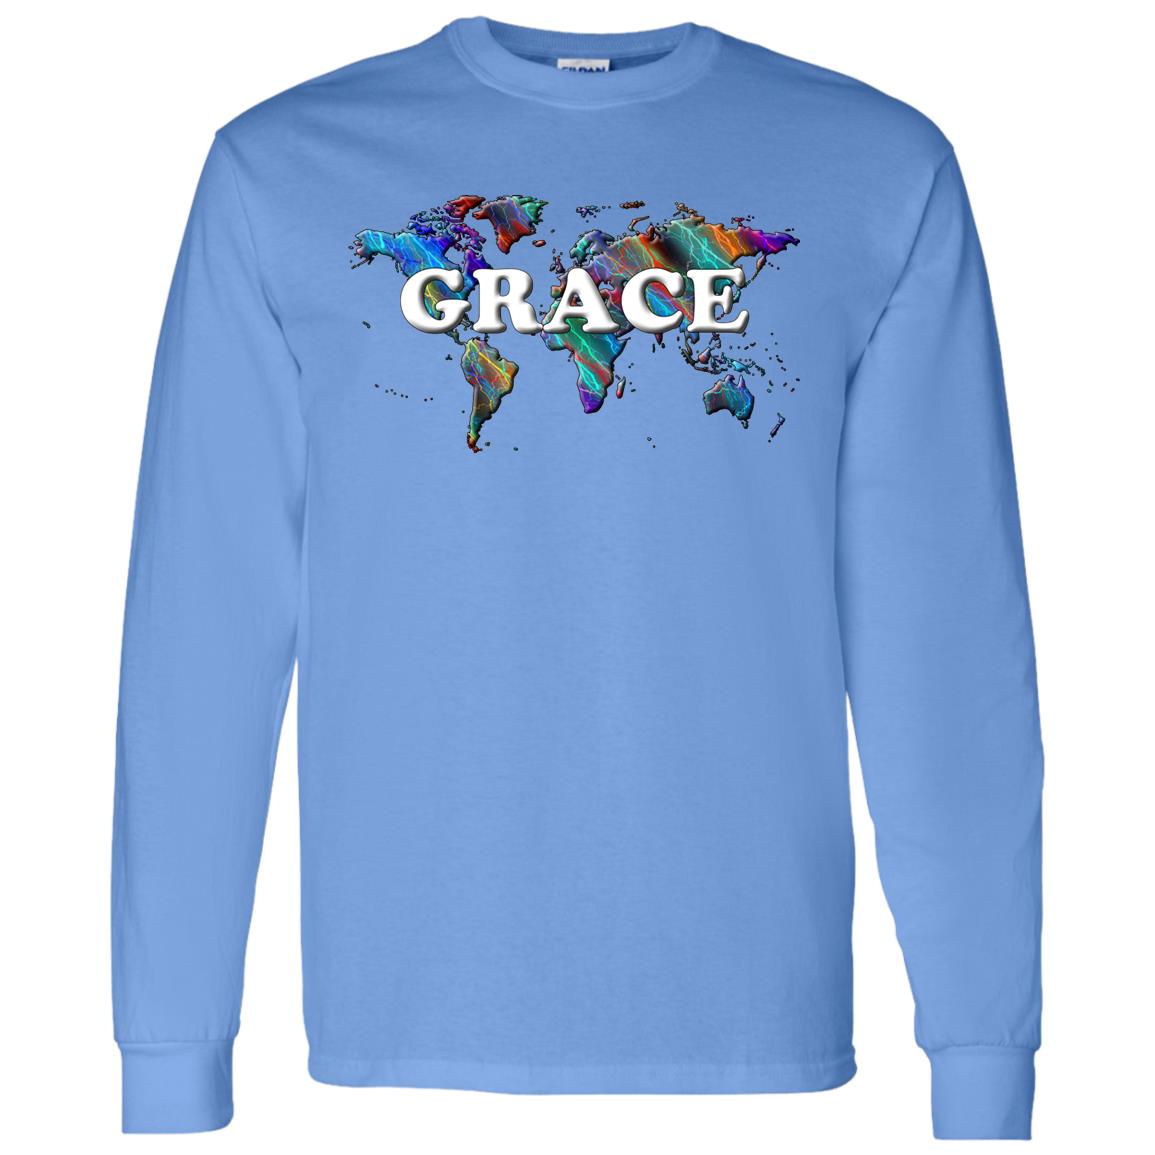 Grace Lonbg Sleeve T-Shirt